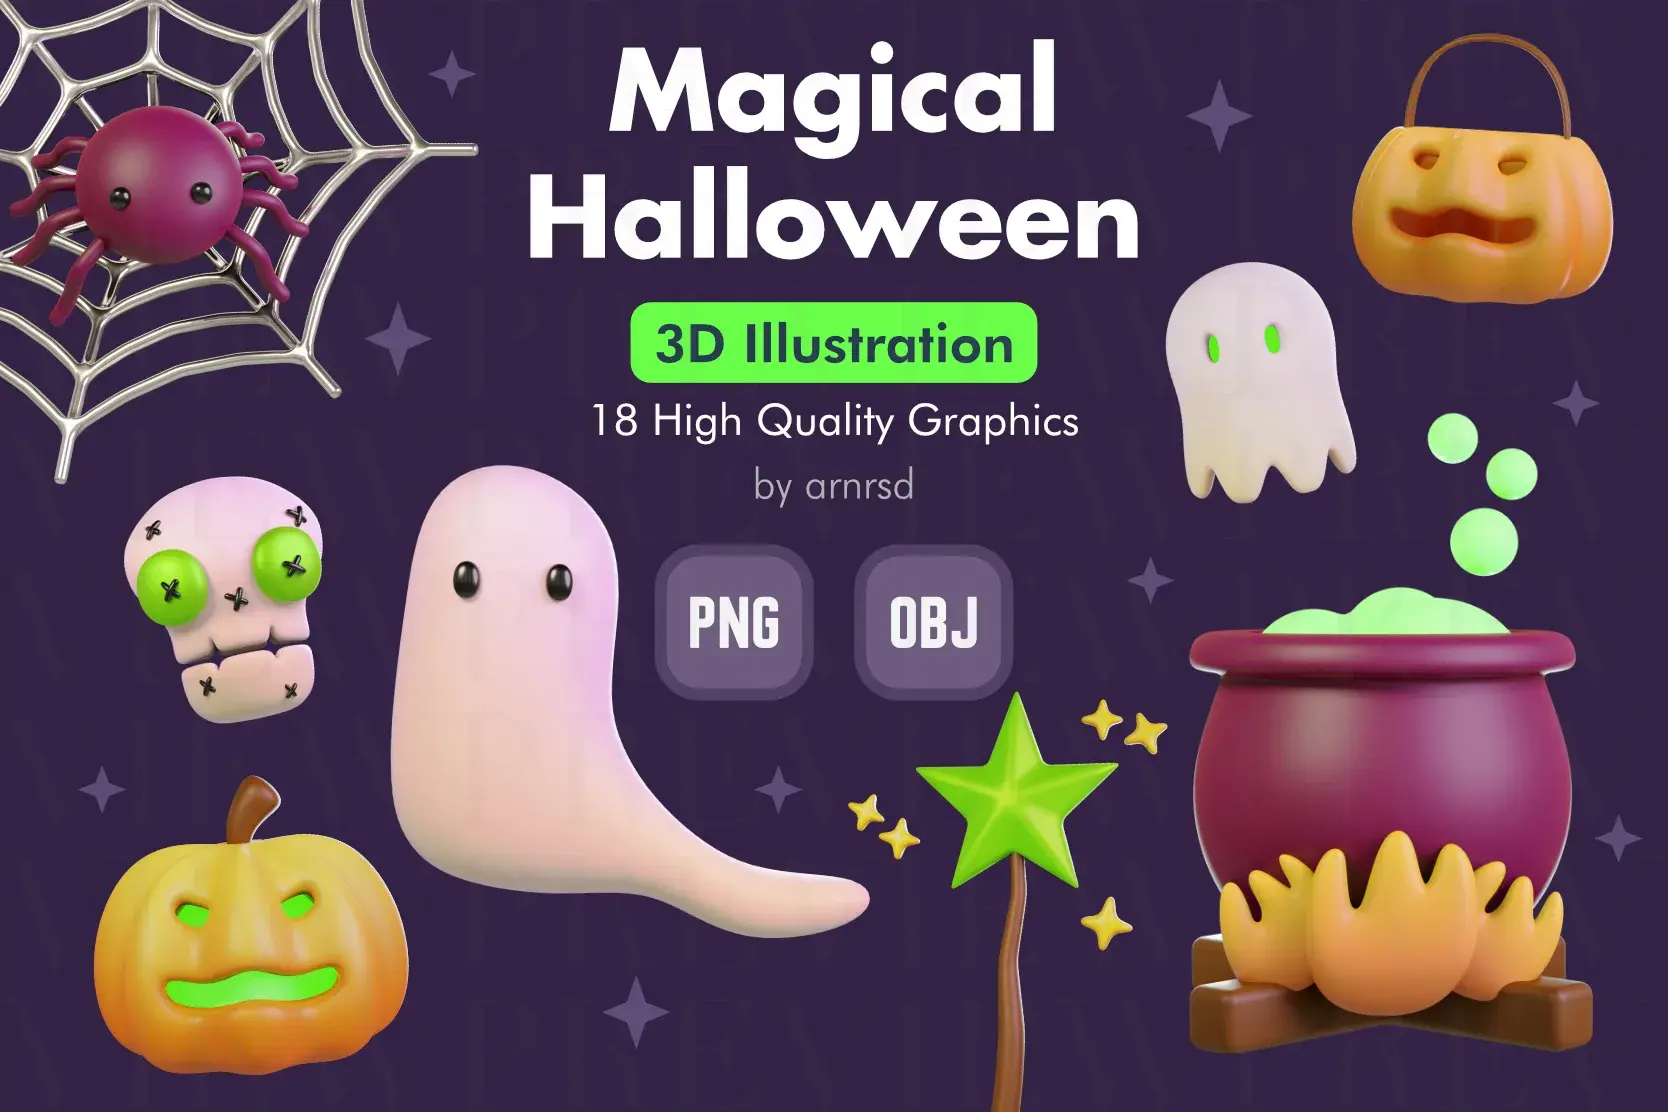 Blogduwebdesign illustrations 3d halloween magical